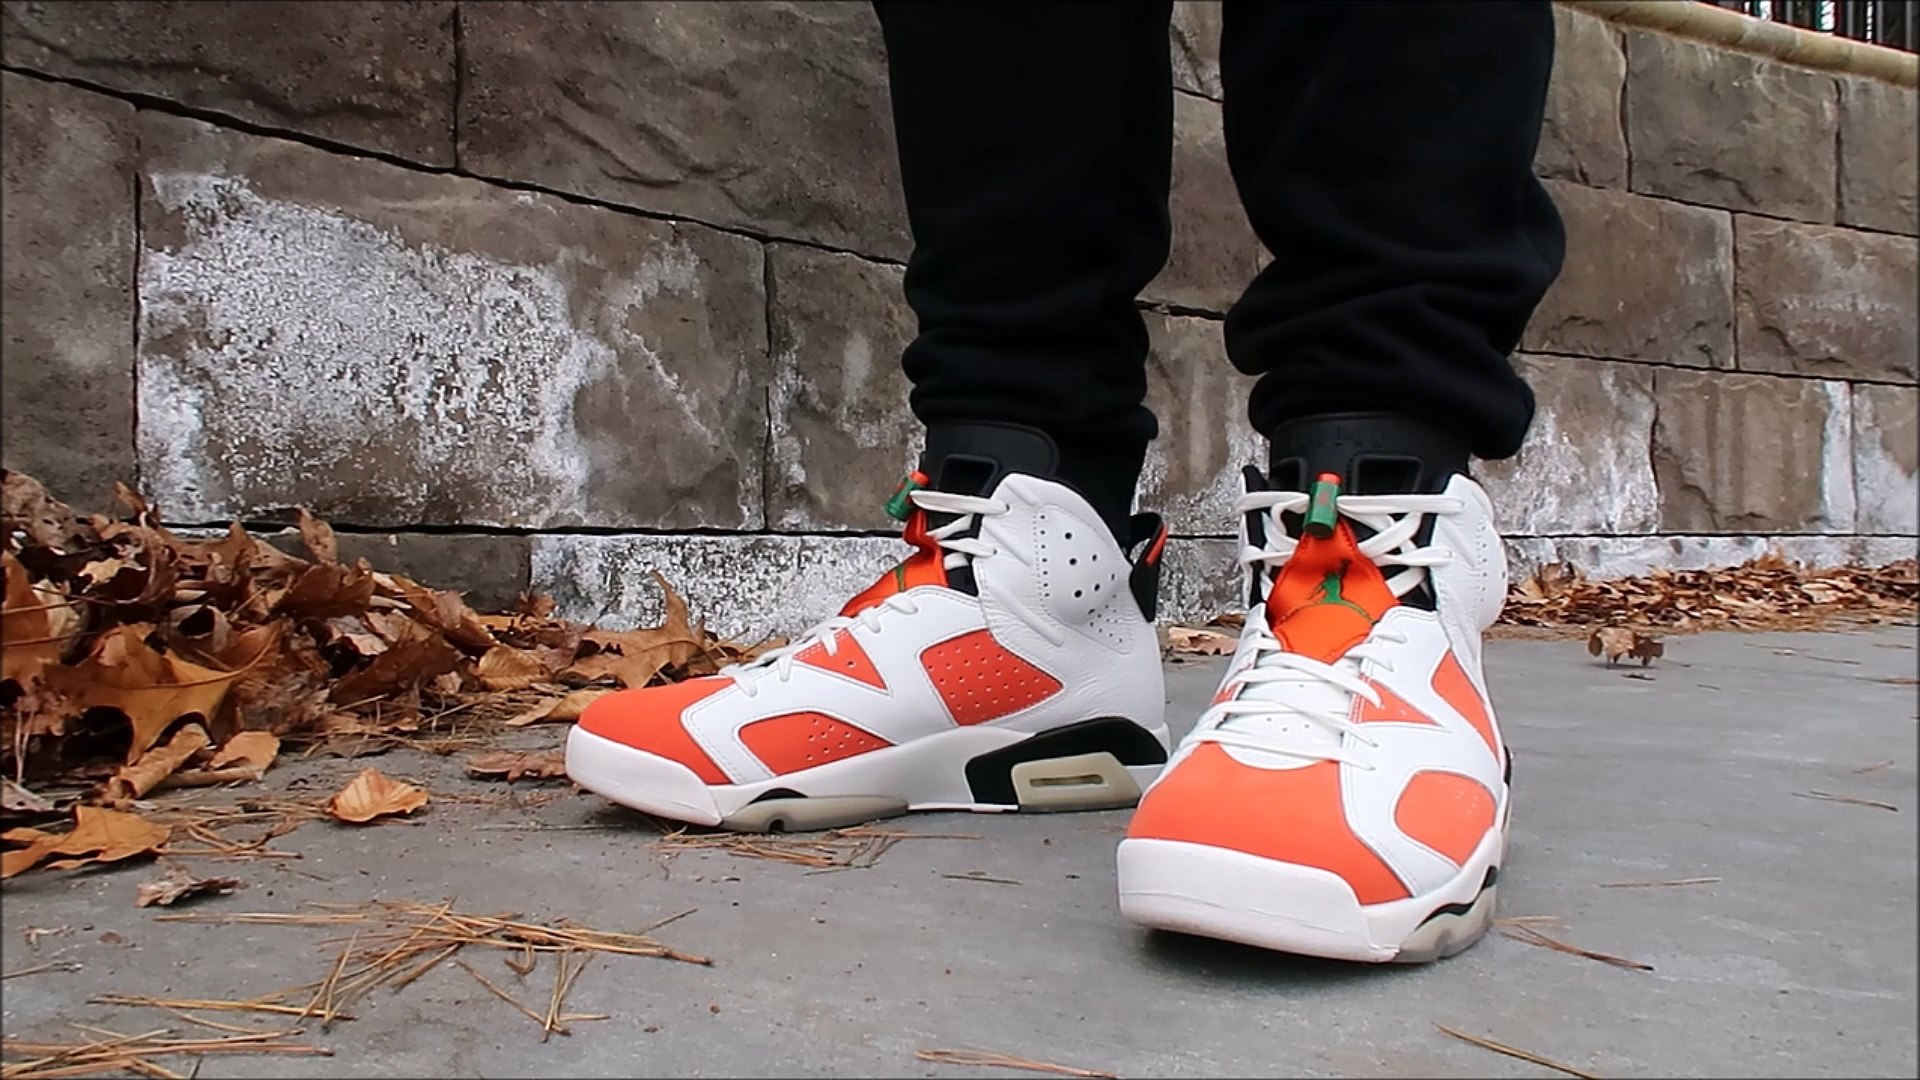 Air Jordan 6 Gatorade Retro VI Shoes On Feet Review - video Dailymotion